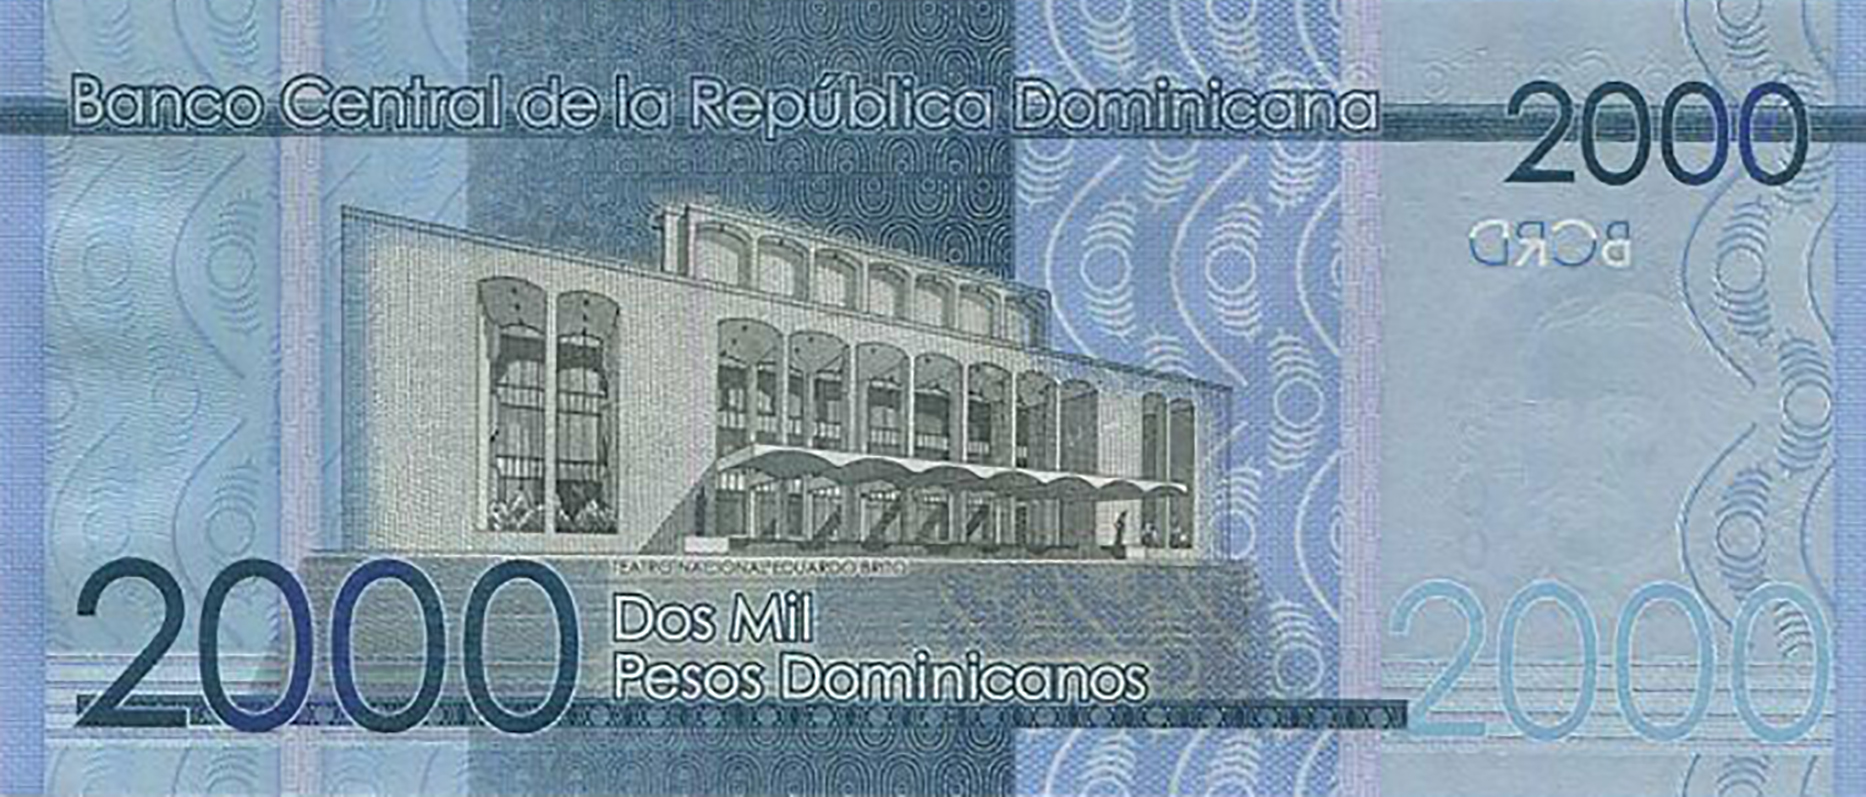 Dominican Republic New Date 2019 2 000 Peso Dominicano Note B732b Confirmed Introduced 04 09